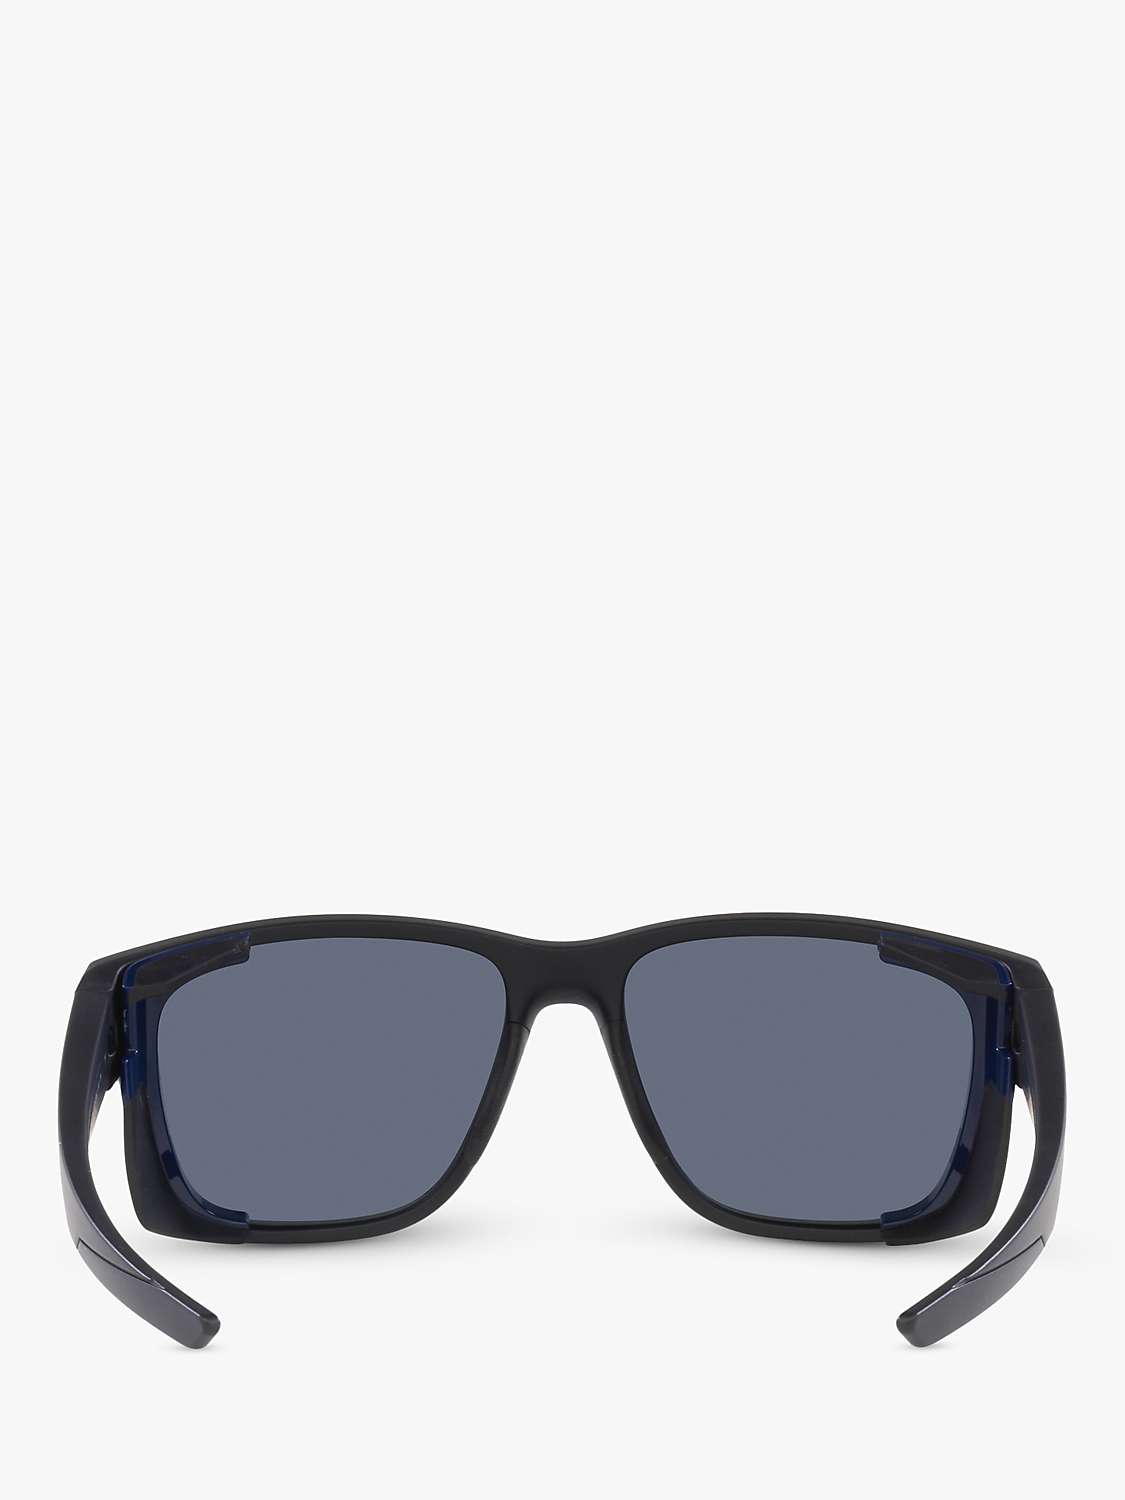 Buy Prada Linea Rossa PS07WS Men's Pillow Sunglasses, Black Online at johnlewis.com